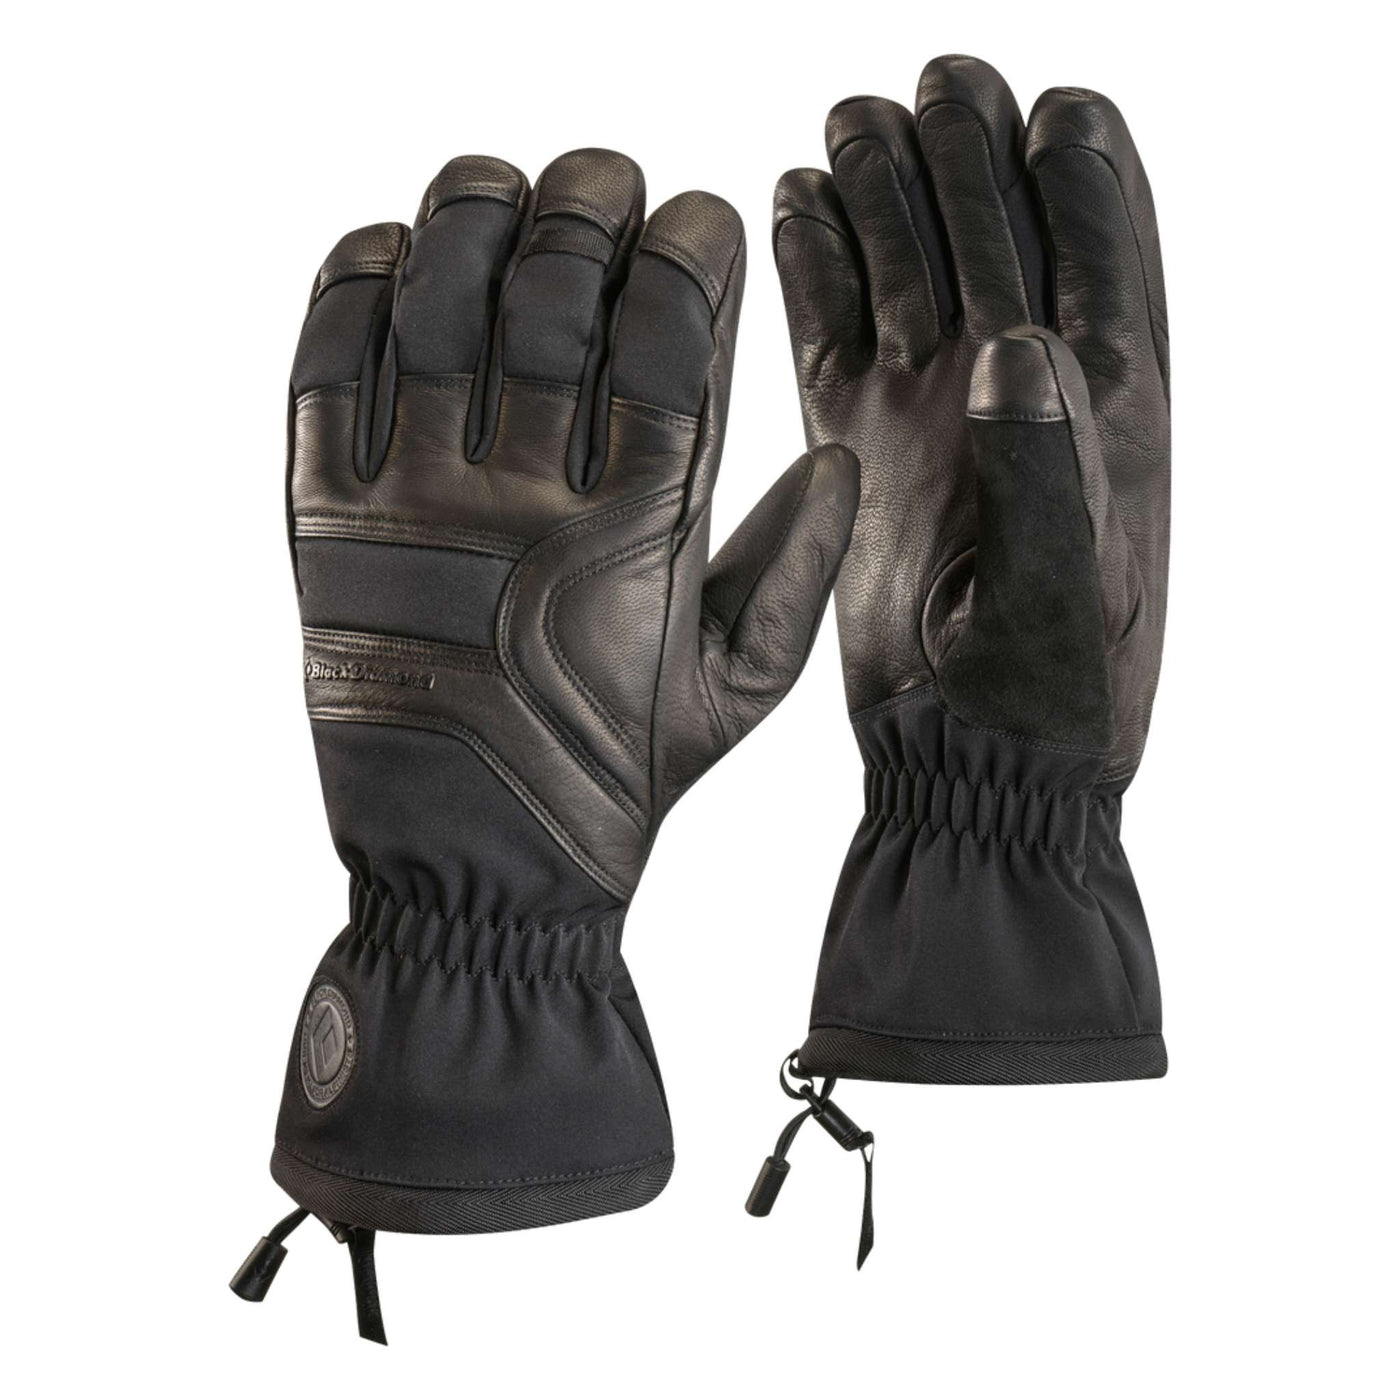 Black Diamond Patrol Glove | Backcountry Leather Gloves NZ | Further Faster Christchurch NZ #black